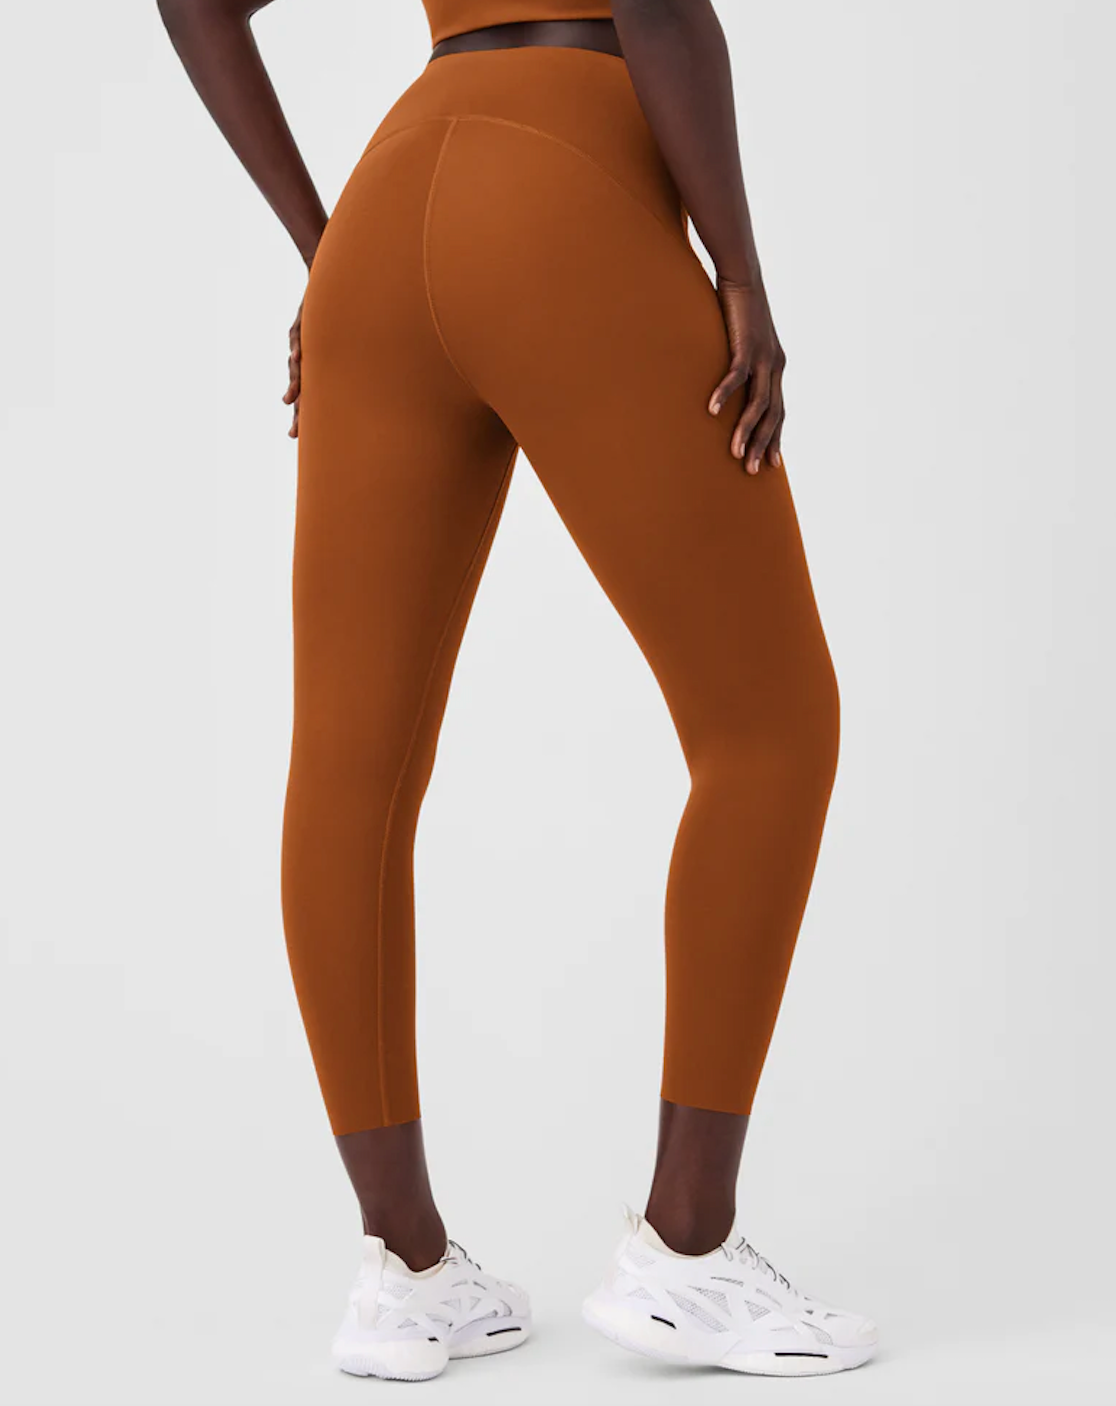 NEW Spanx Booty Boost® Active Printed 7/8 Leggings- Wine/Orange